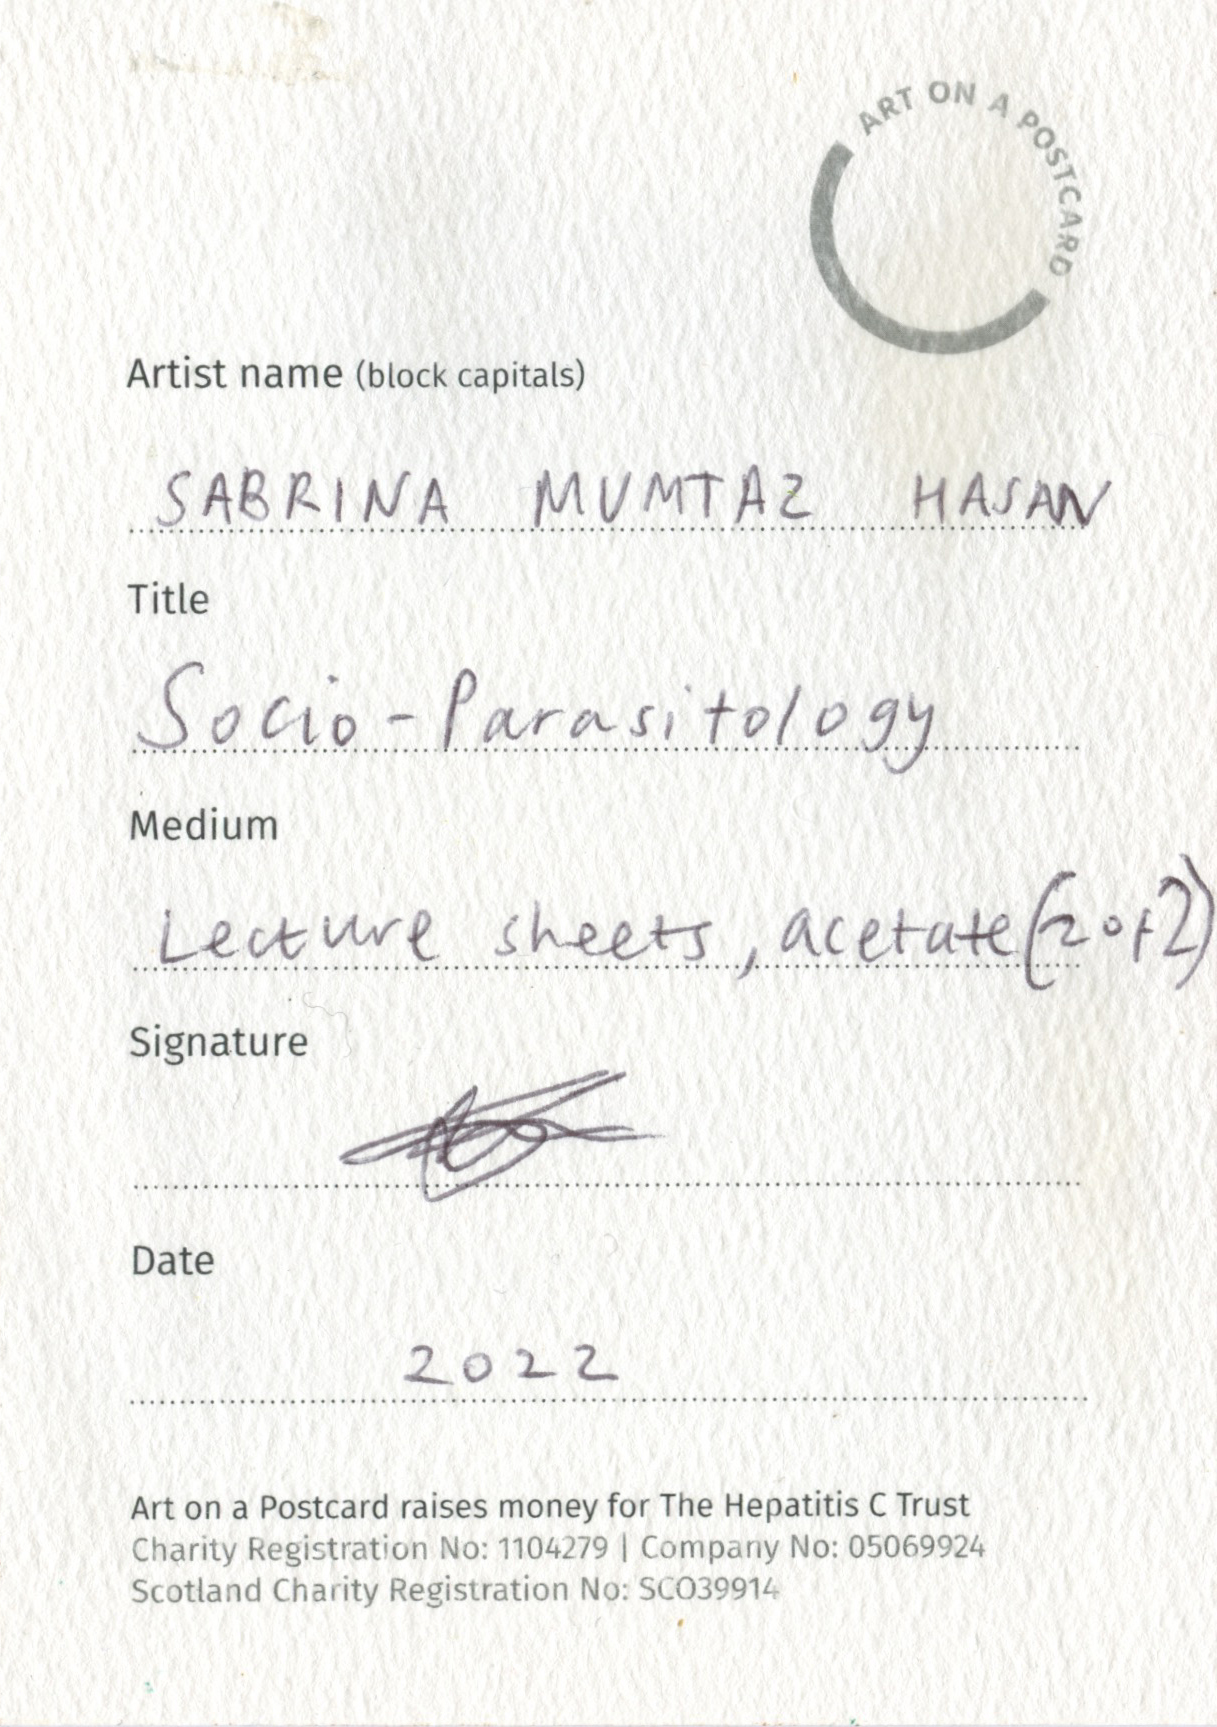 14. Sabrina Mumtaz Hasan - Socio-Parasitology (2/2) - BACK